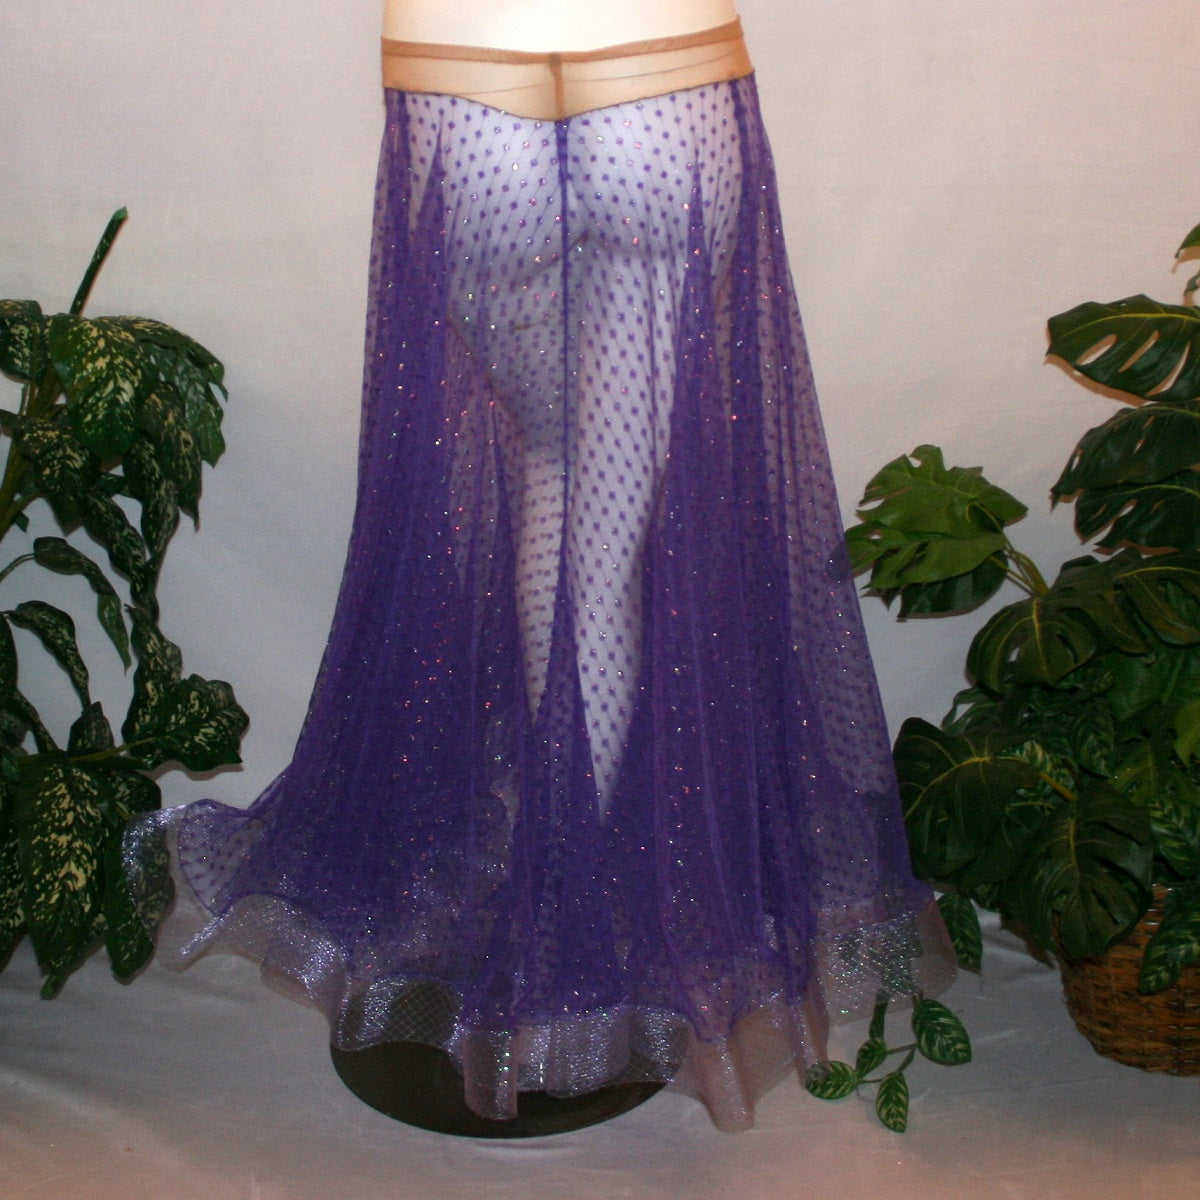 back view of Purple ballroom skirt created of yards of textured purple iridescent glitter sheer fabric with 4" iridescent horsehair hem. 